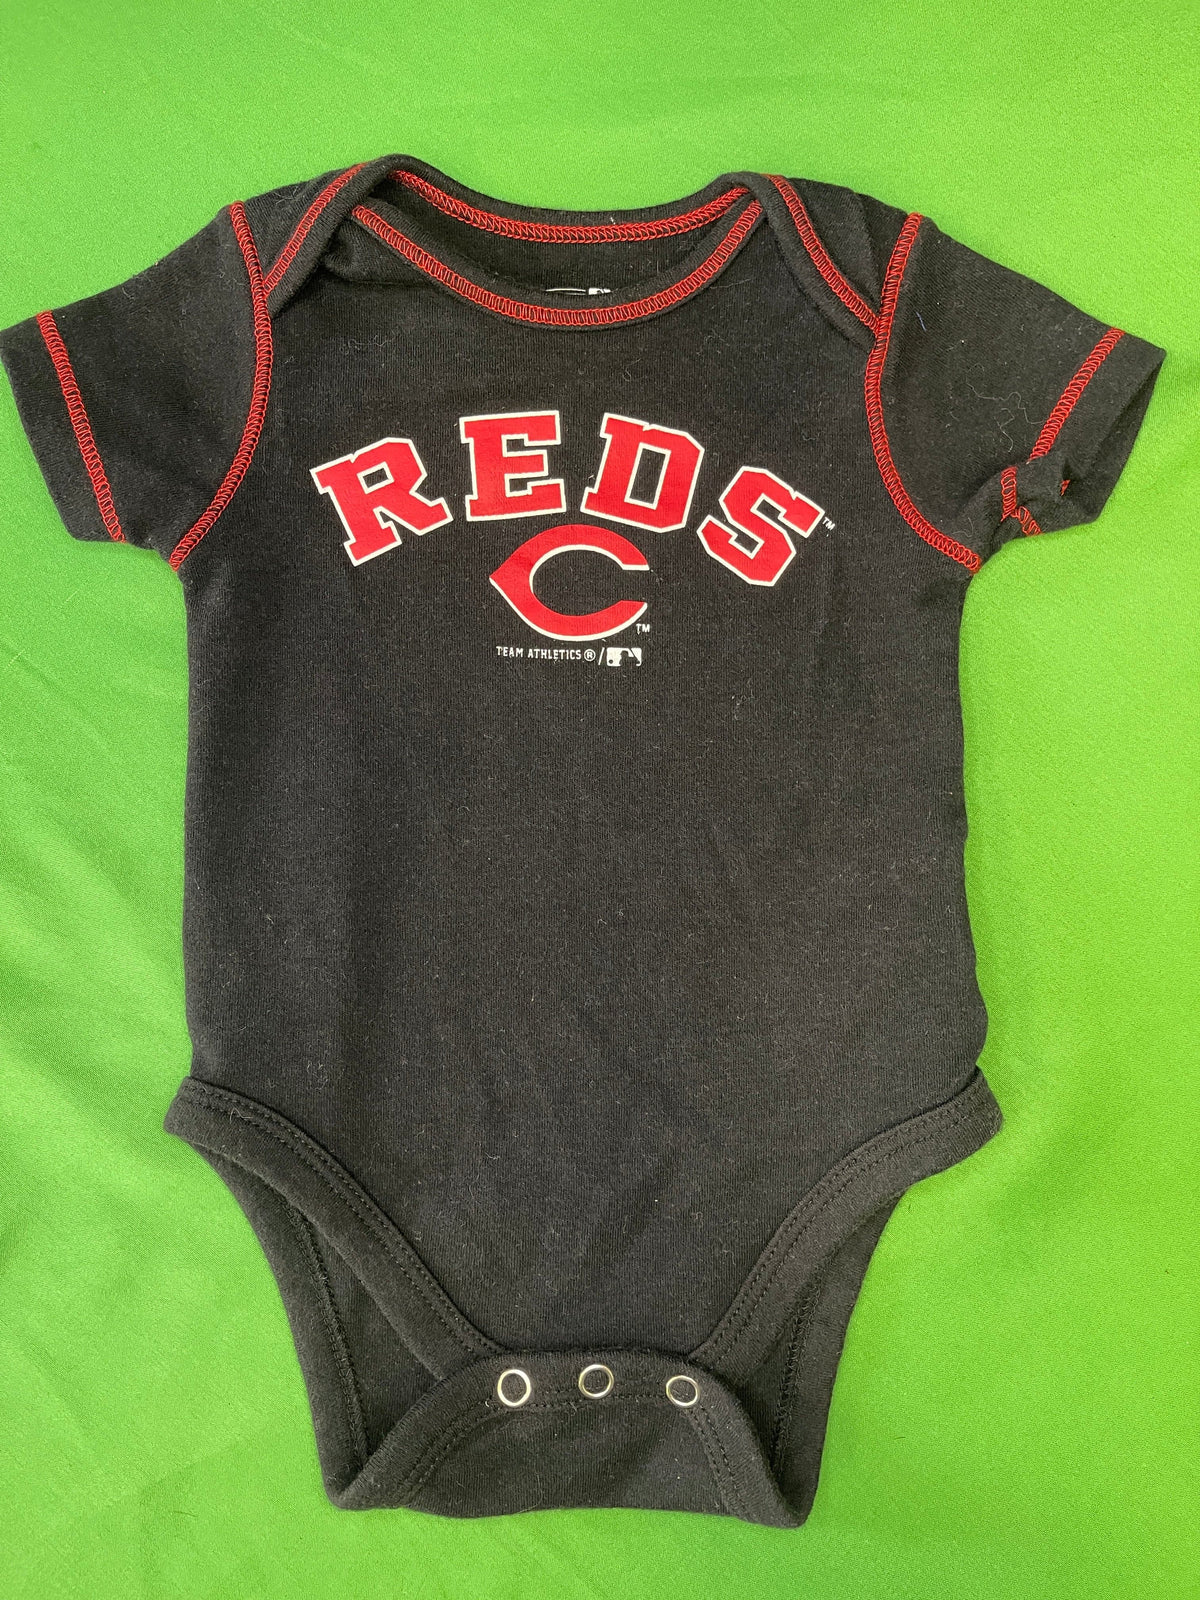 MLB Cincinnati Reds Baby Bodysuit/Vest Infant 3-6 Months